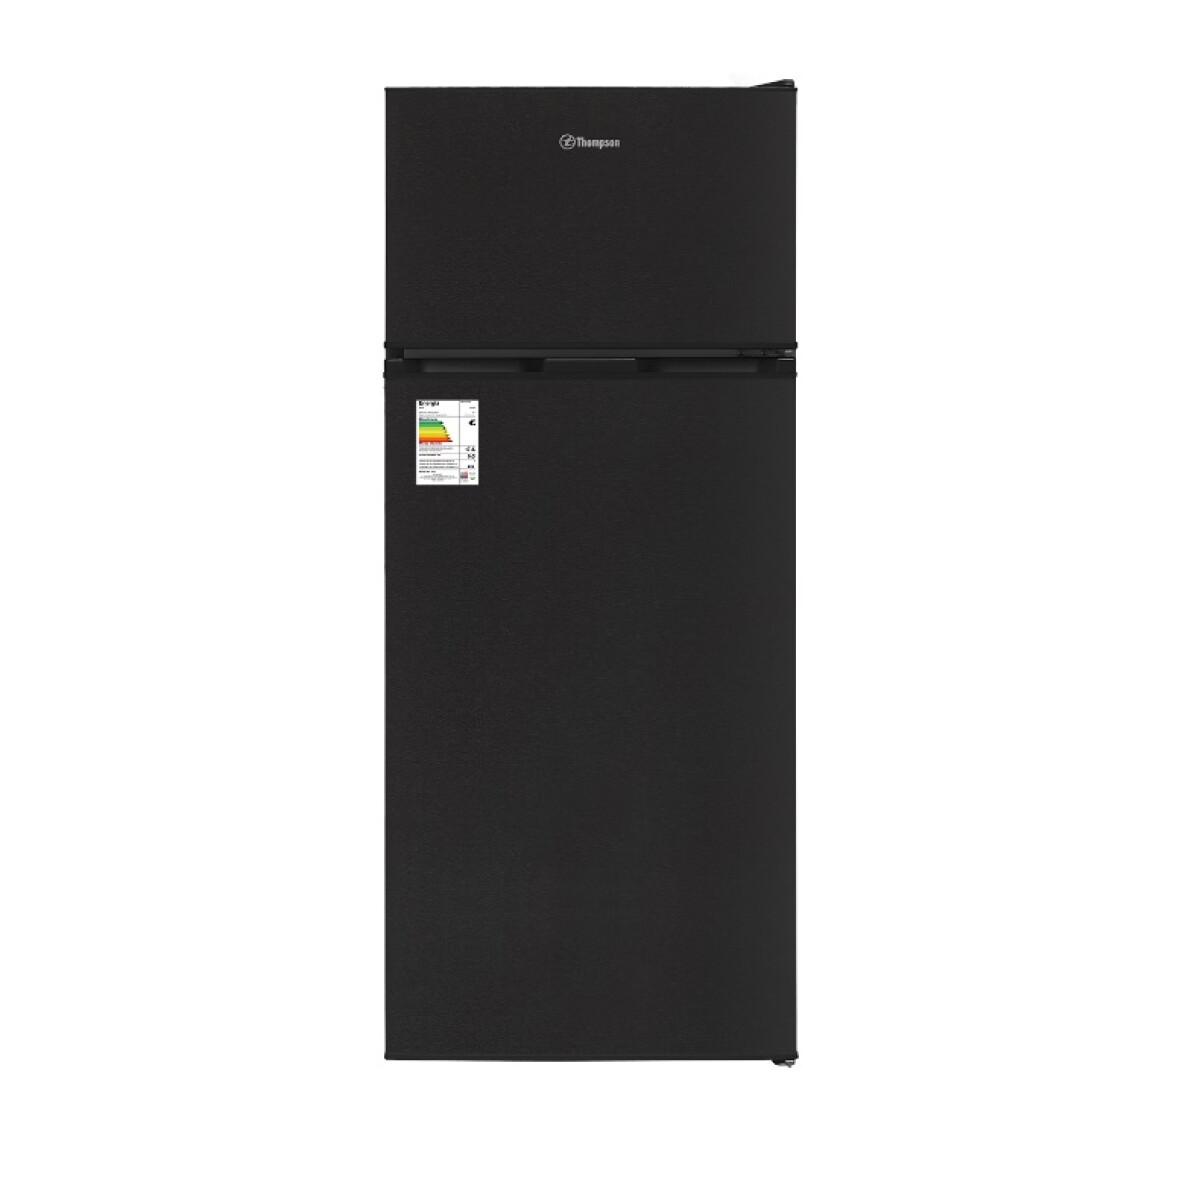 Refrigerador Thompson Rth 210 Dark Inox Frio Natural Albion - 72110 - 001 